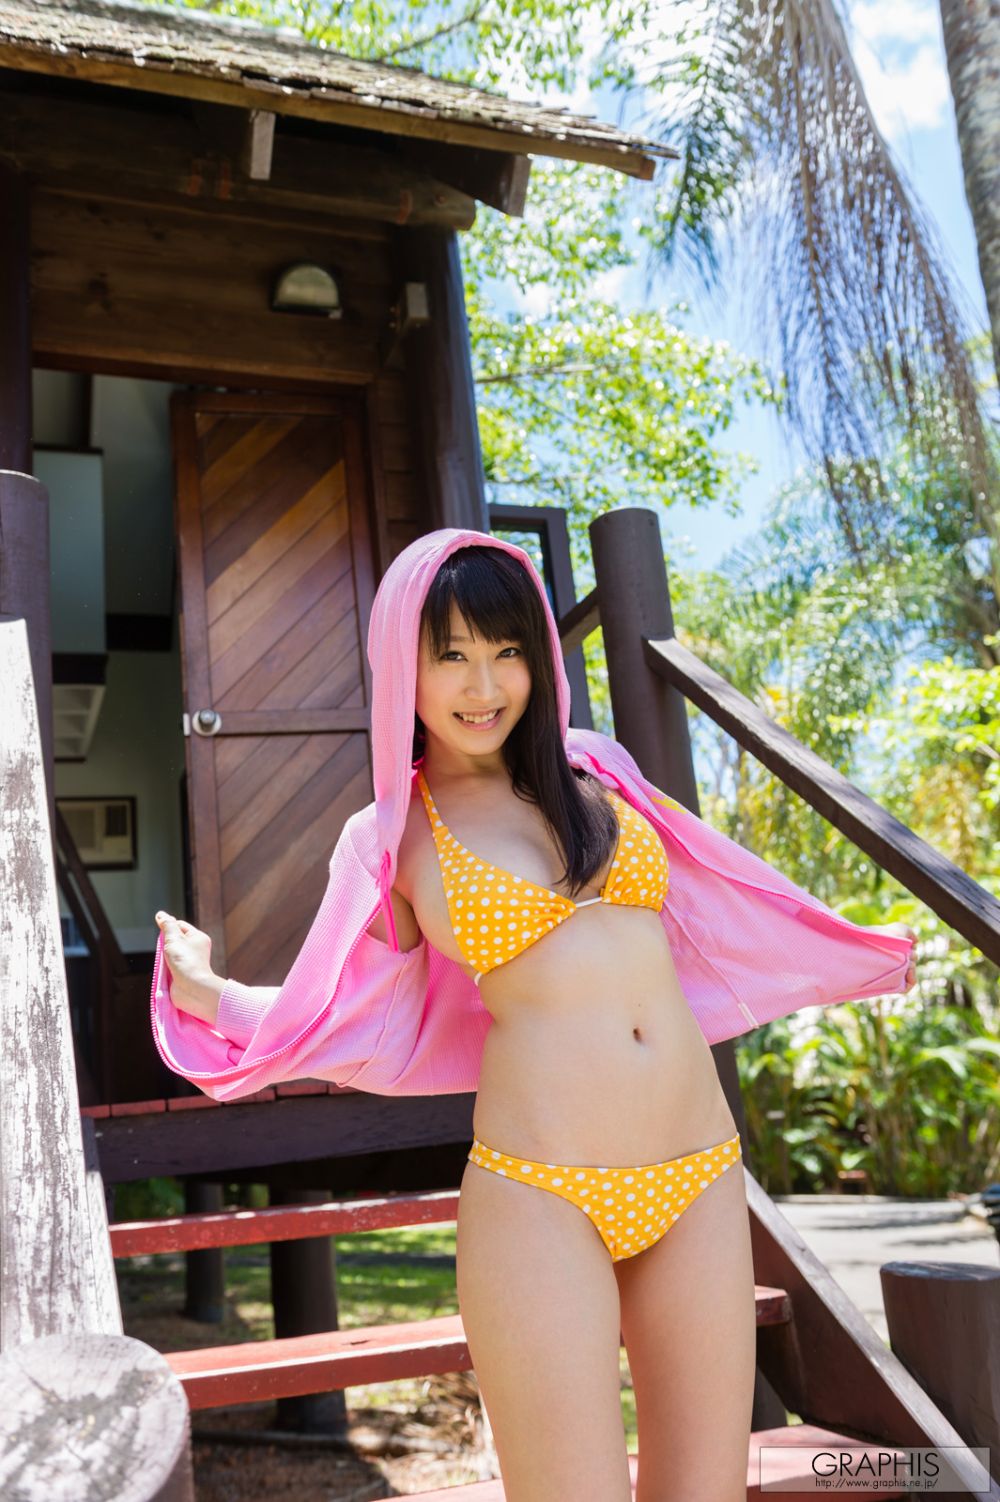 Arisa Misato Sexy and Hottest Photos , Latest Pics